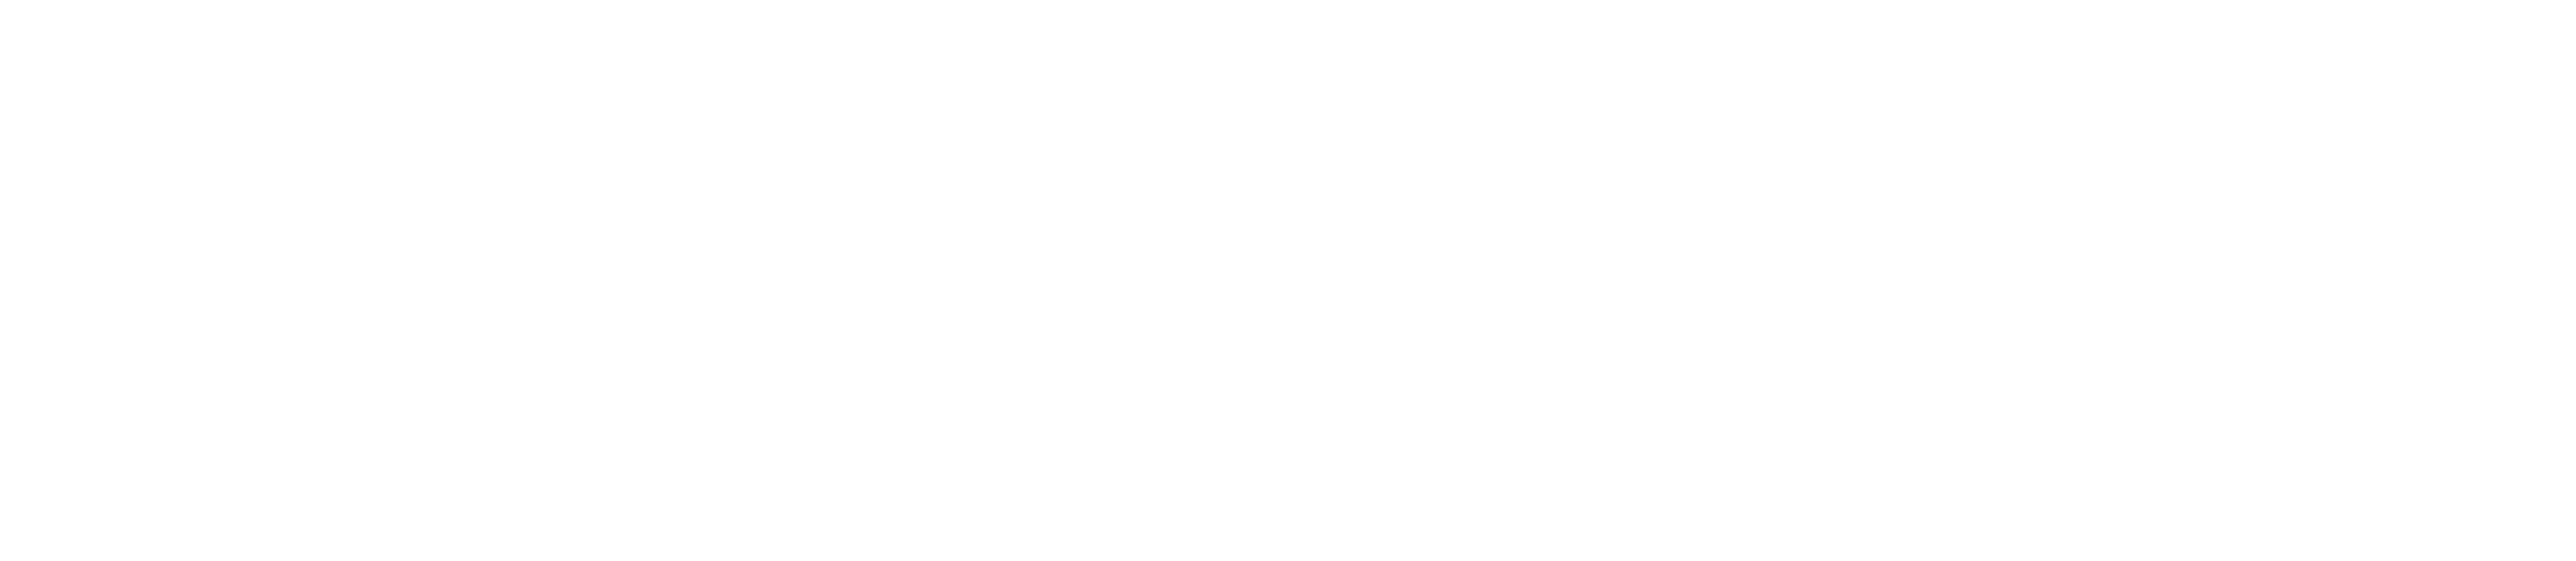 Conscious Capitalism Chapter Logo